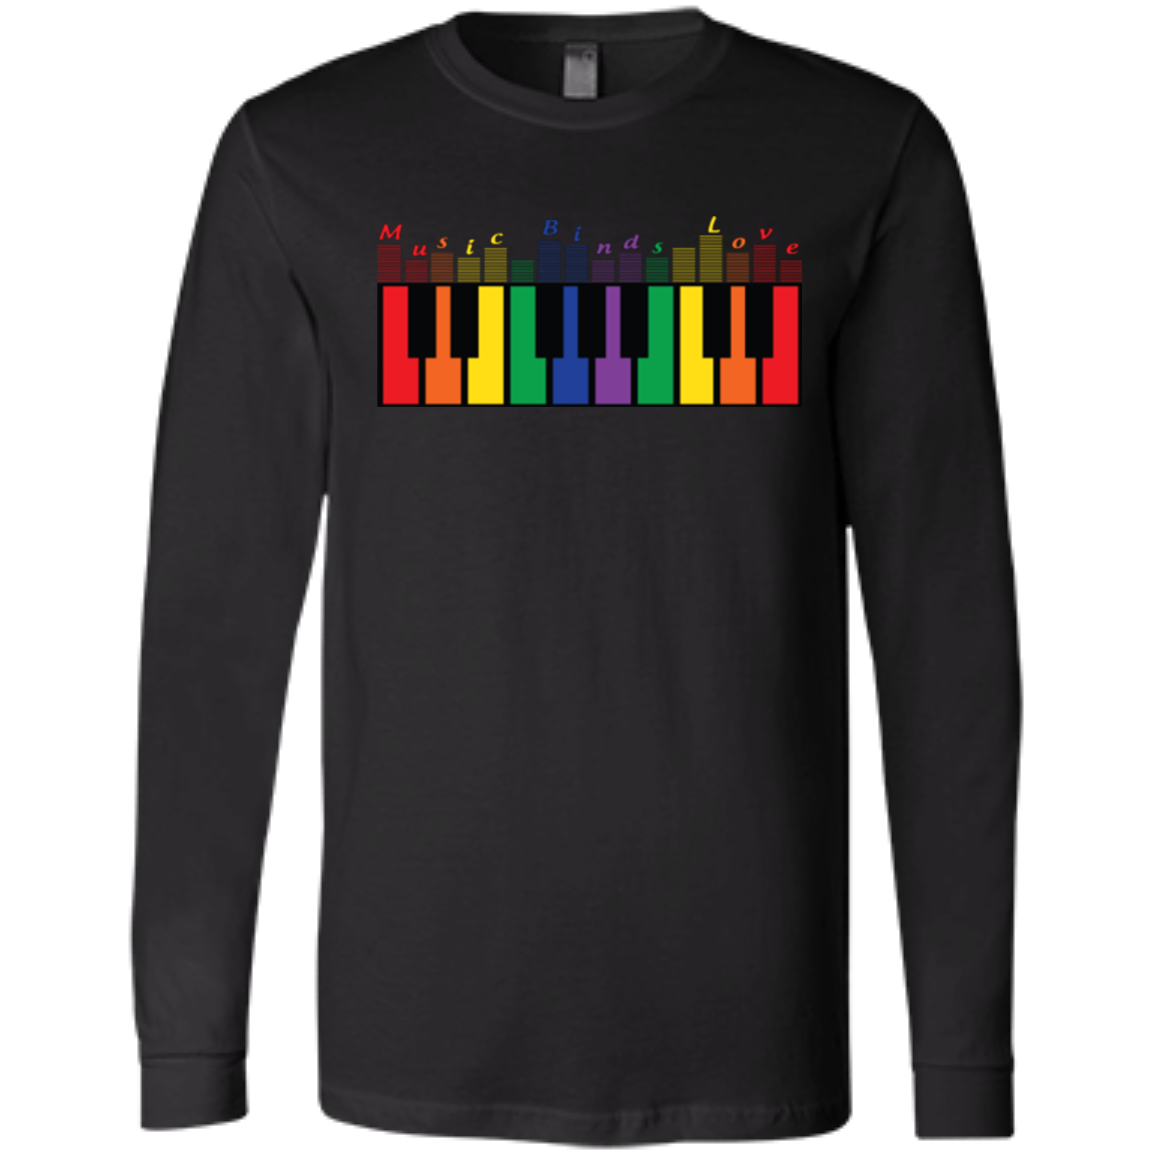 "Music Binds Love" Rainbow LGBT Pride black round neck full sleeves tshirt for men